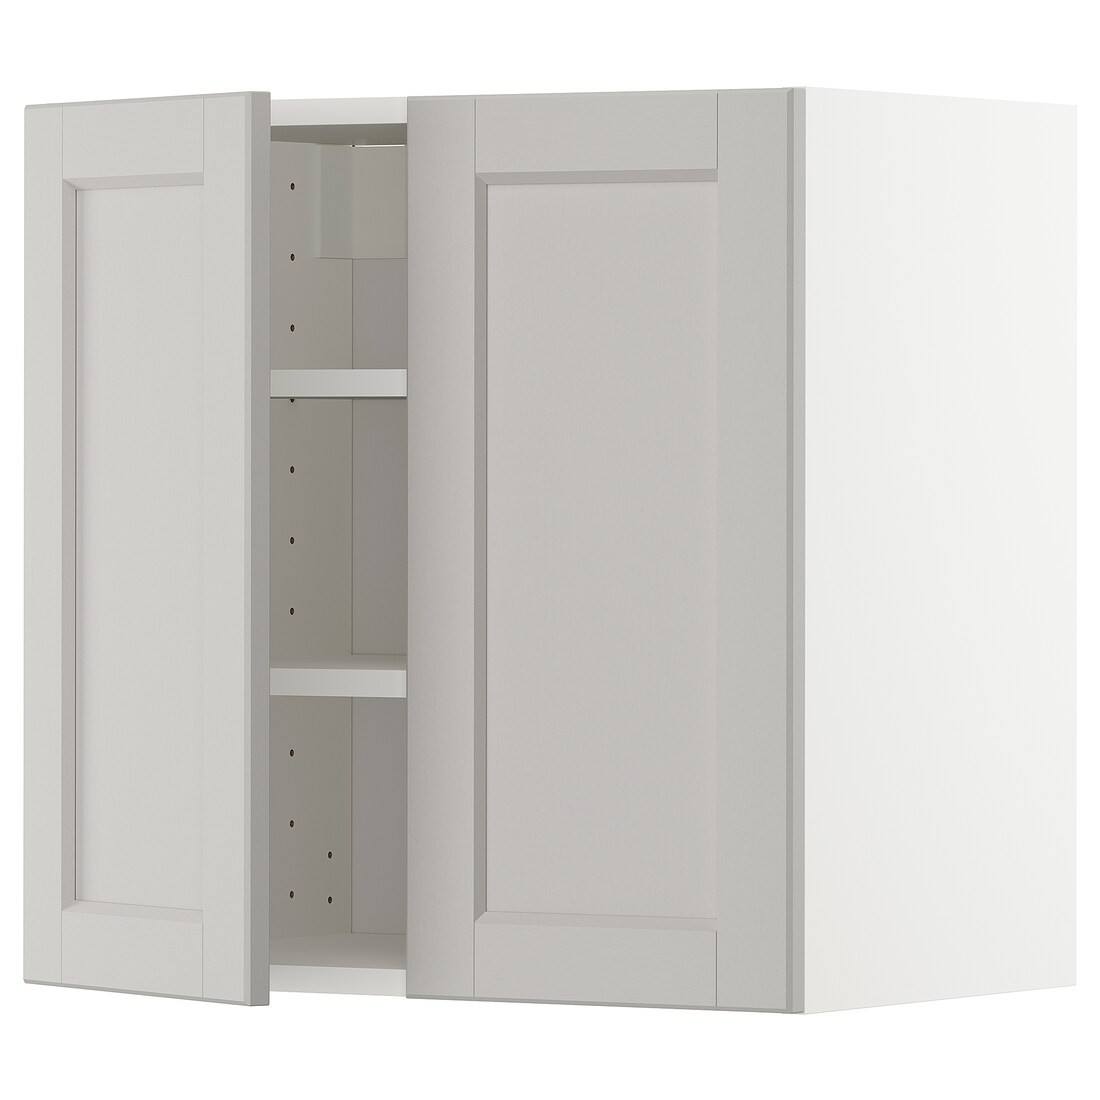 METOD МЕТОД Навесной шкаф с полками / 2 дверцы, белый / Lerhyttan светло-серый, 60x60 см